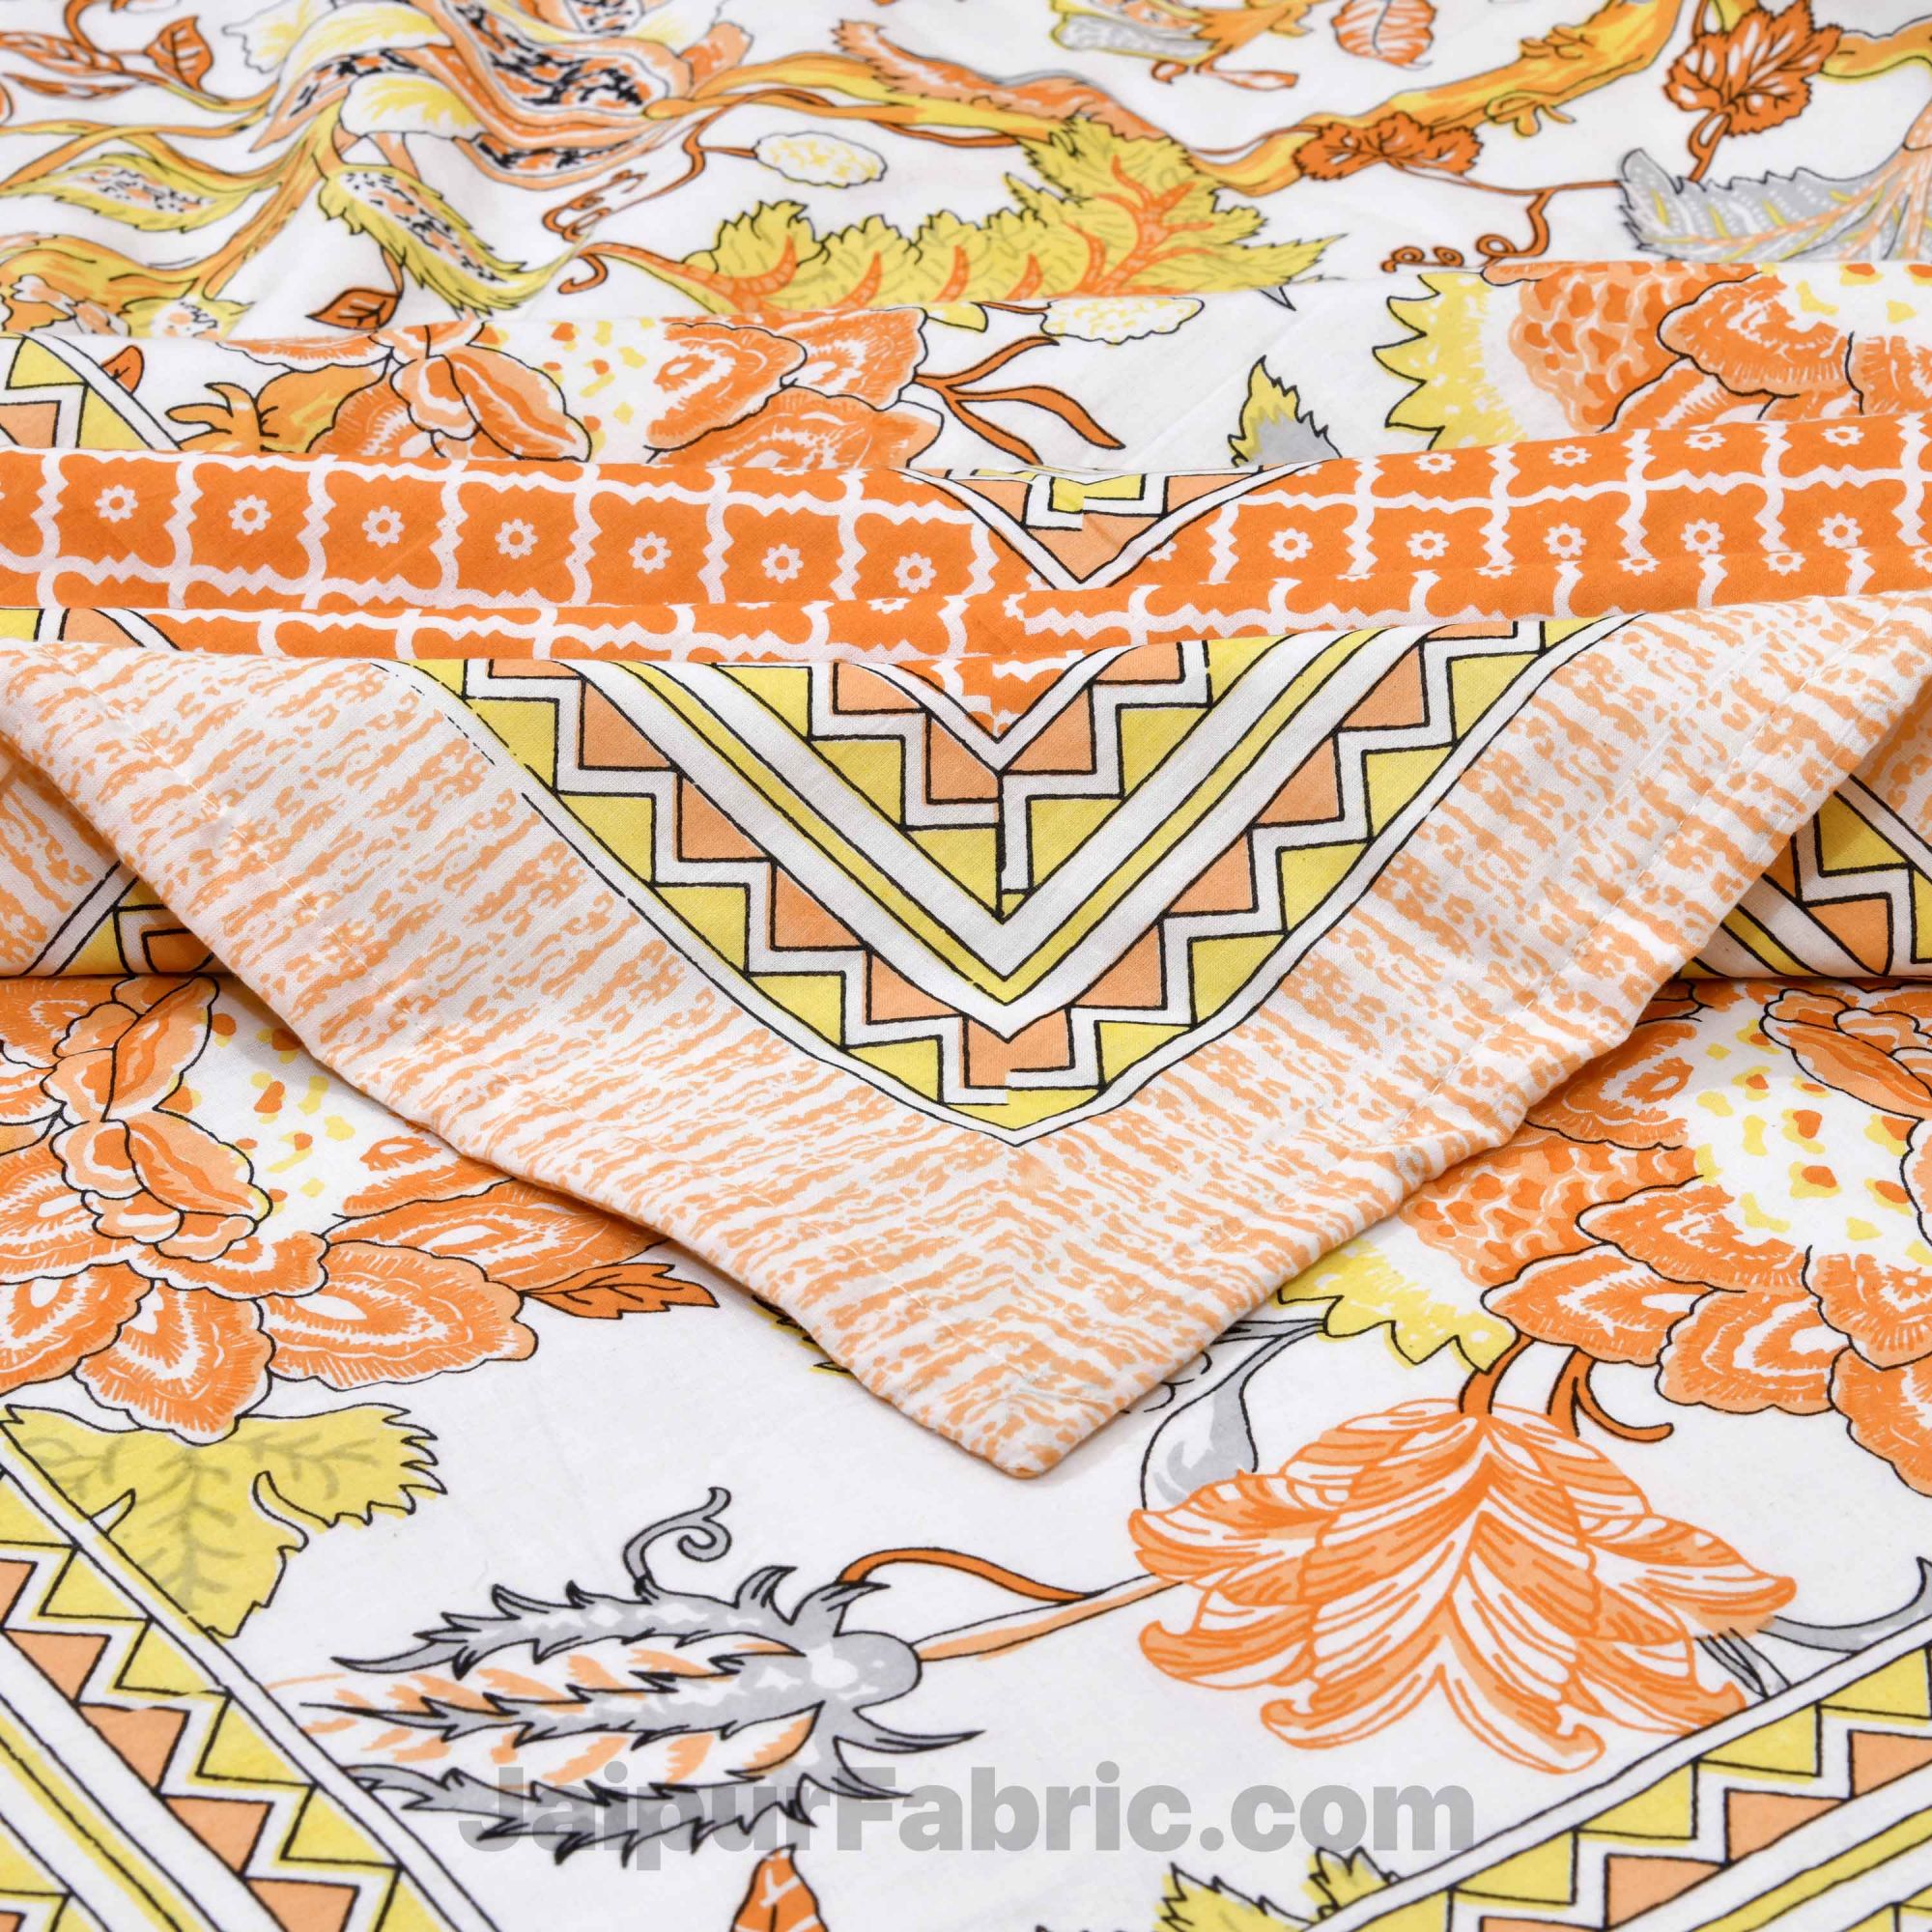 Lightweight Reversible Double Bed Dohar Orange Gala FlowerSkin Friendly Pure Cotton MulMul Blanket / AC Comforter / Summer Quilt